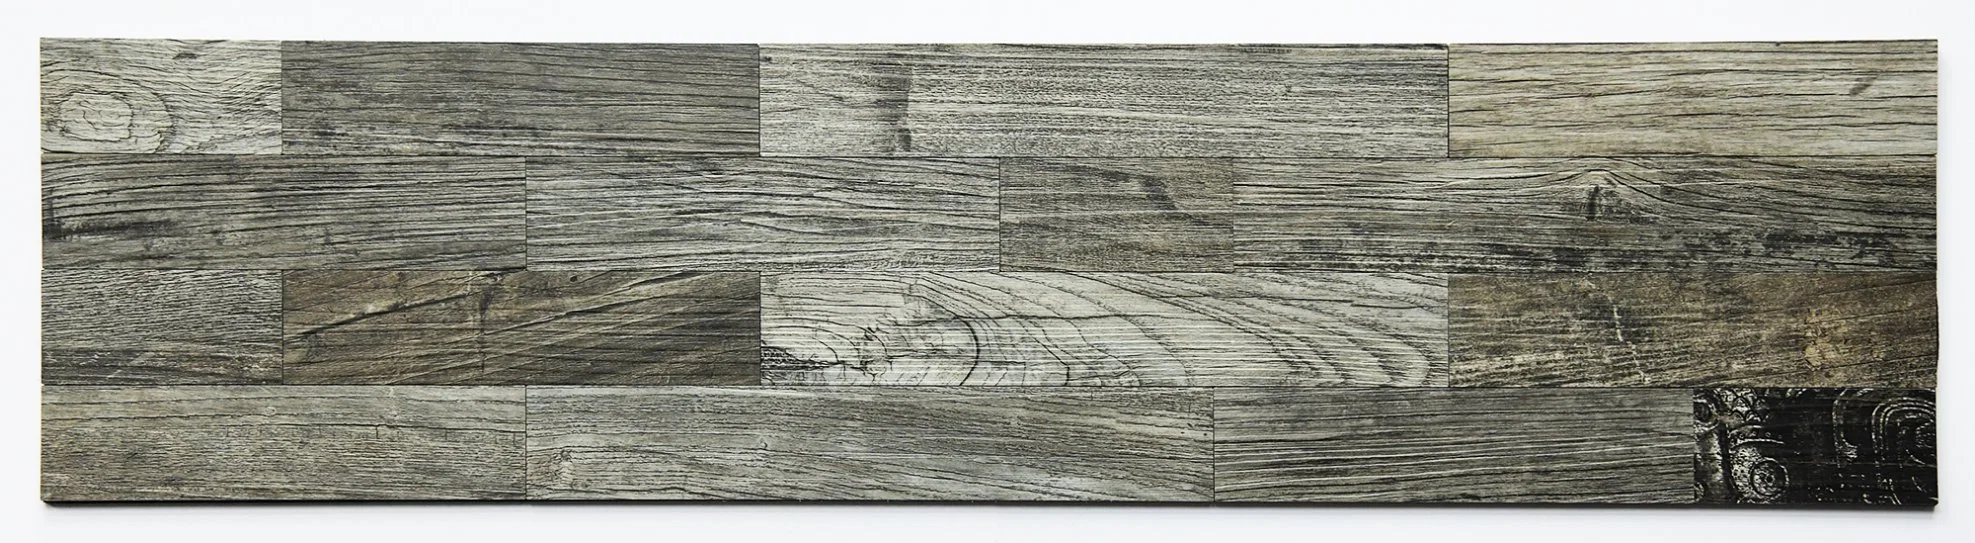 Wood Looking Self Adhesive Wall Tile for Interior Kitchen Bathroom